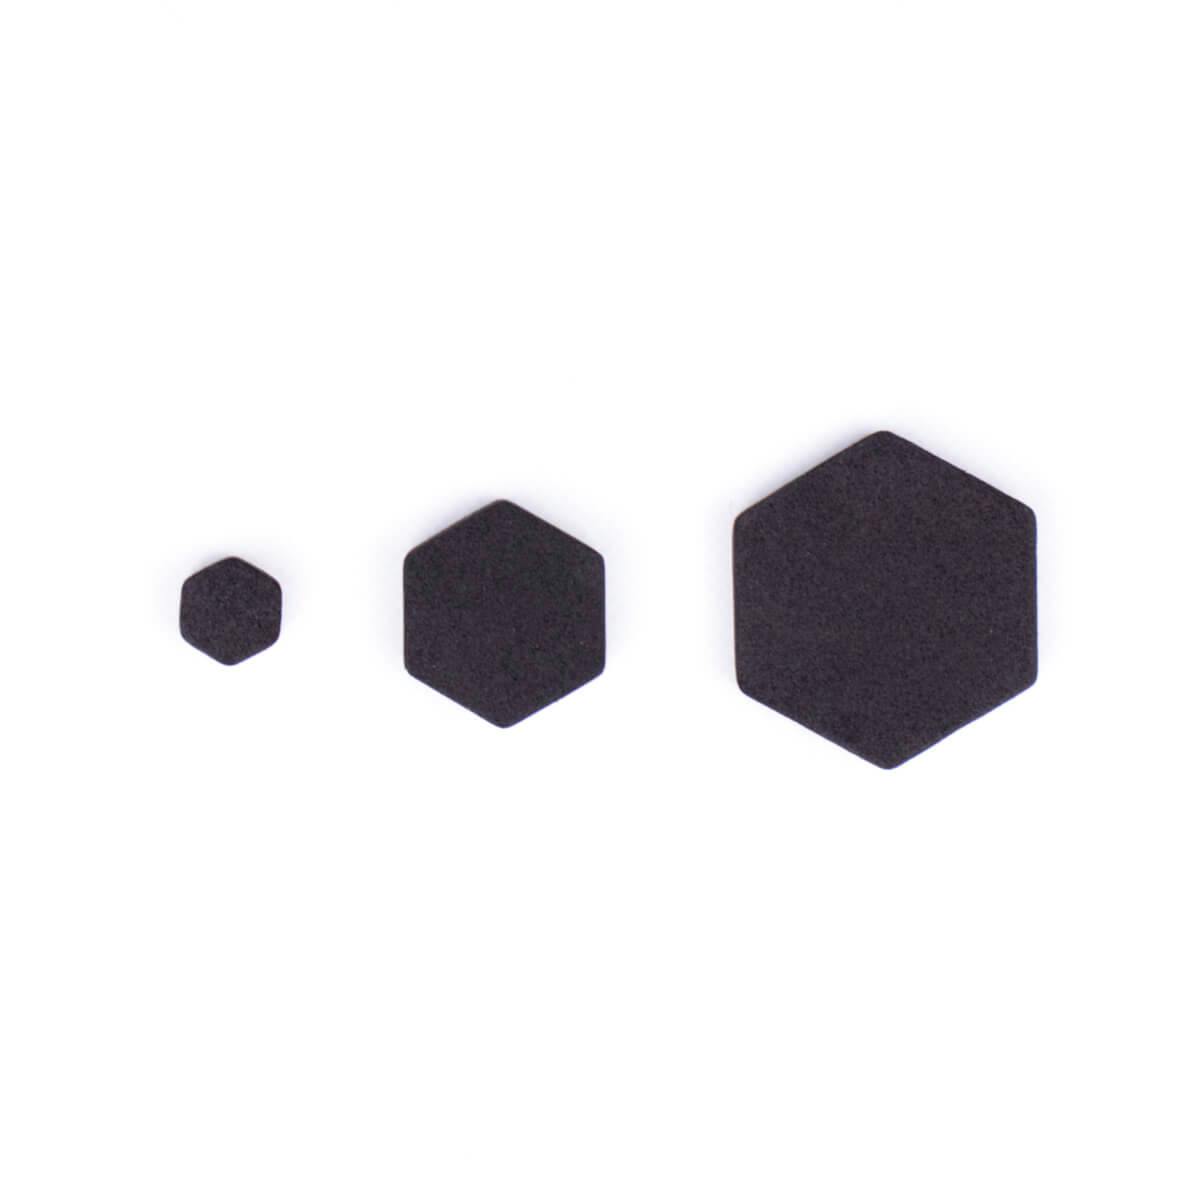 Sample sizes of foam hexagons